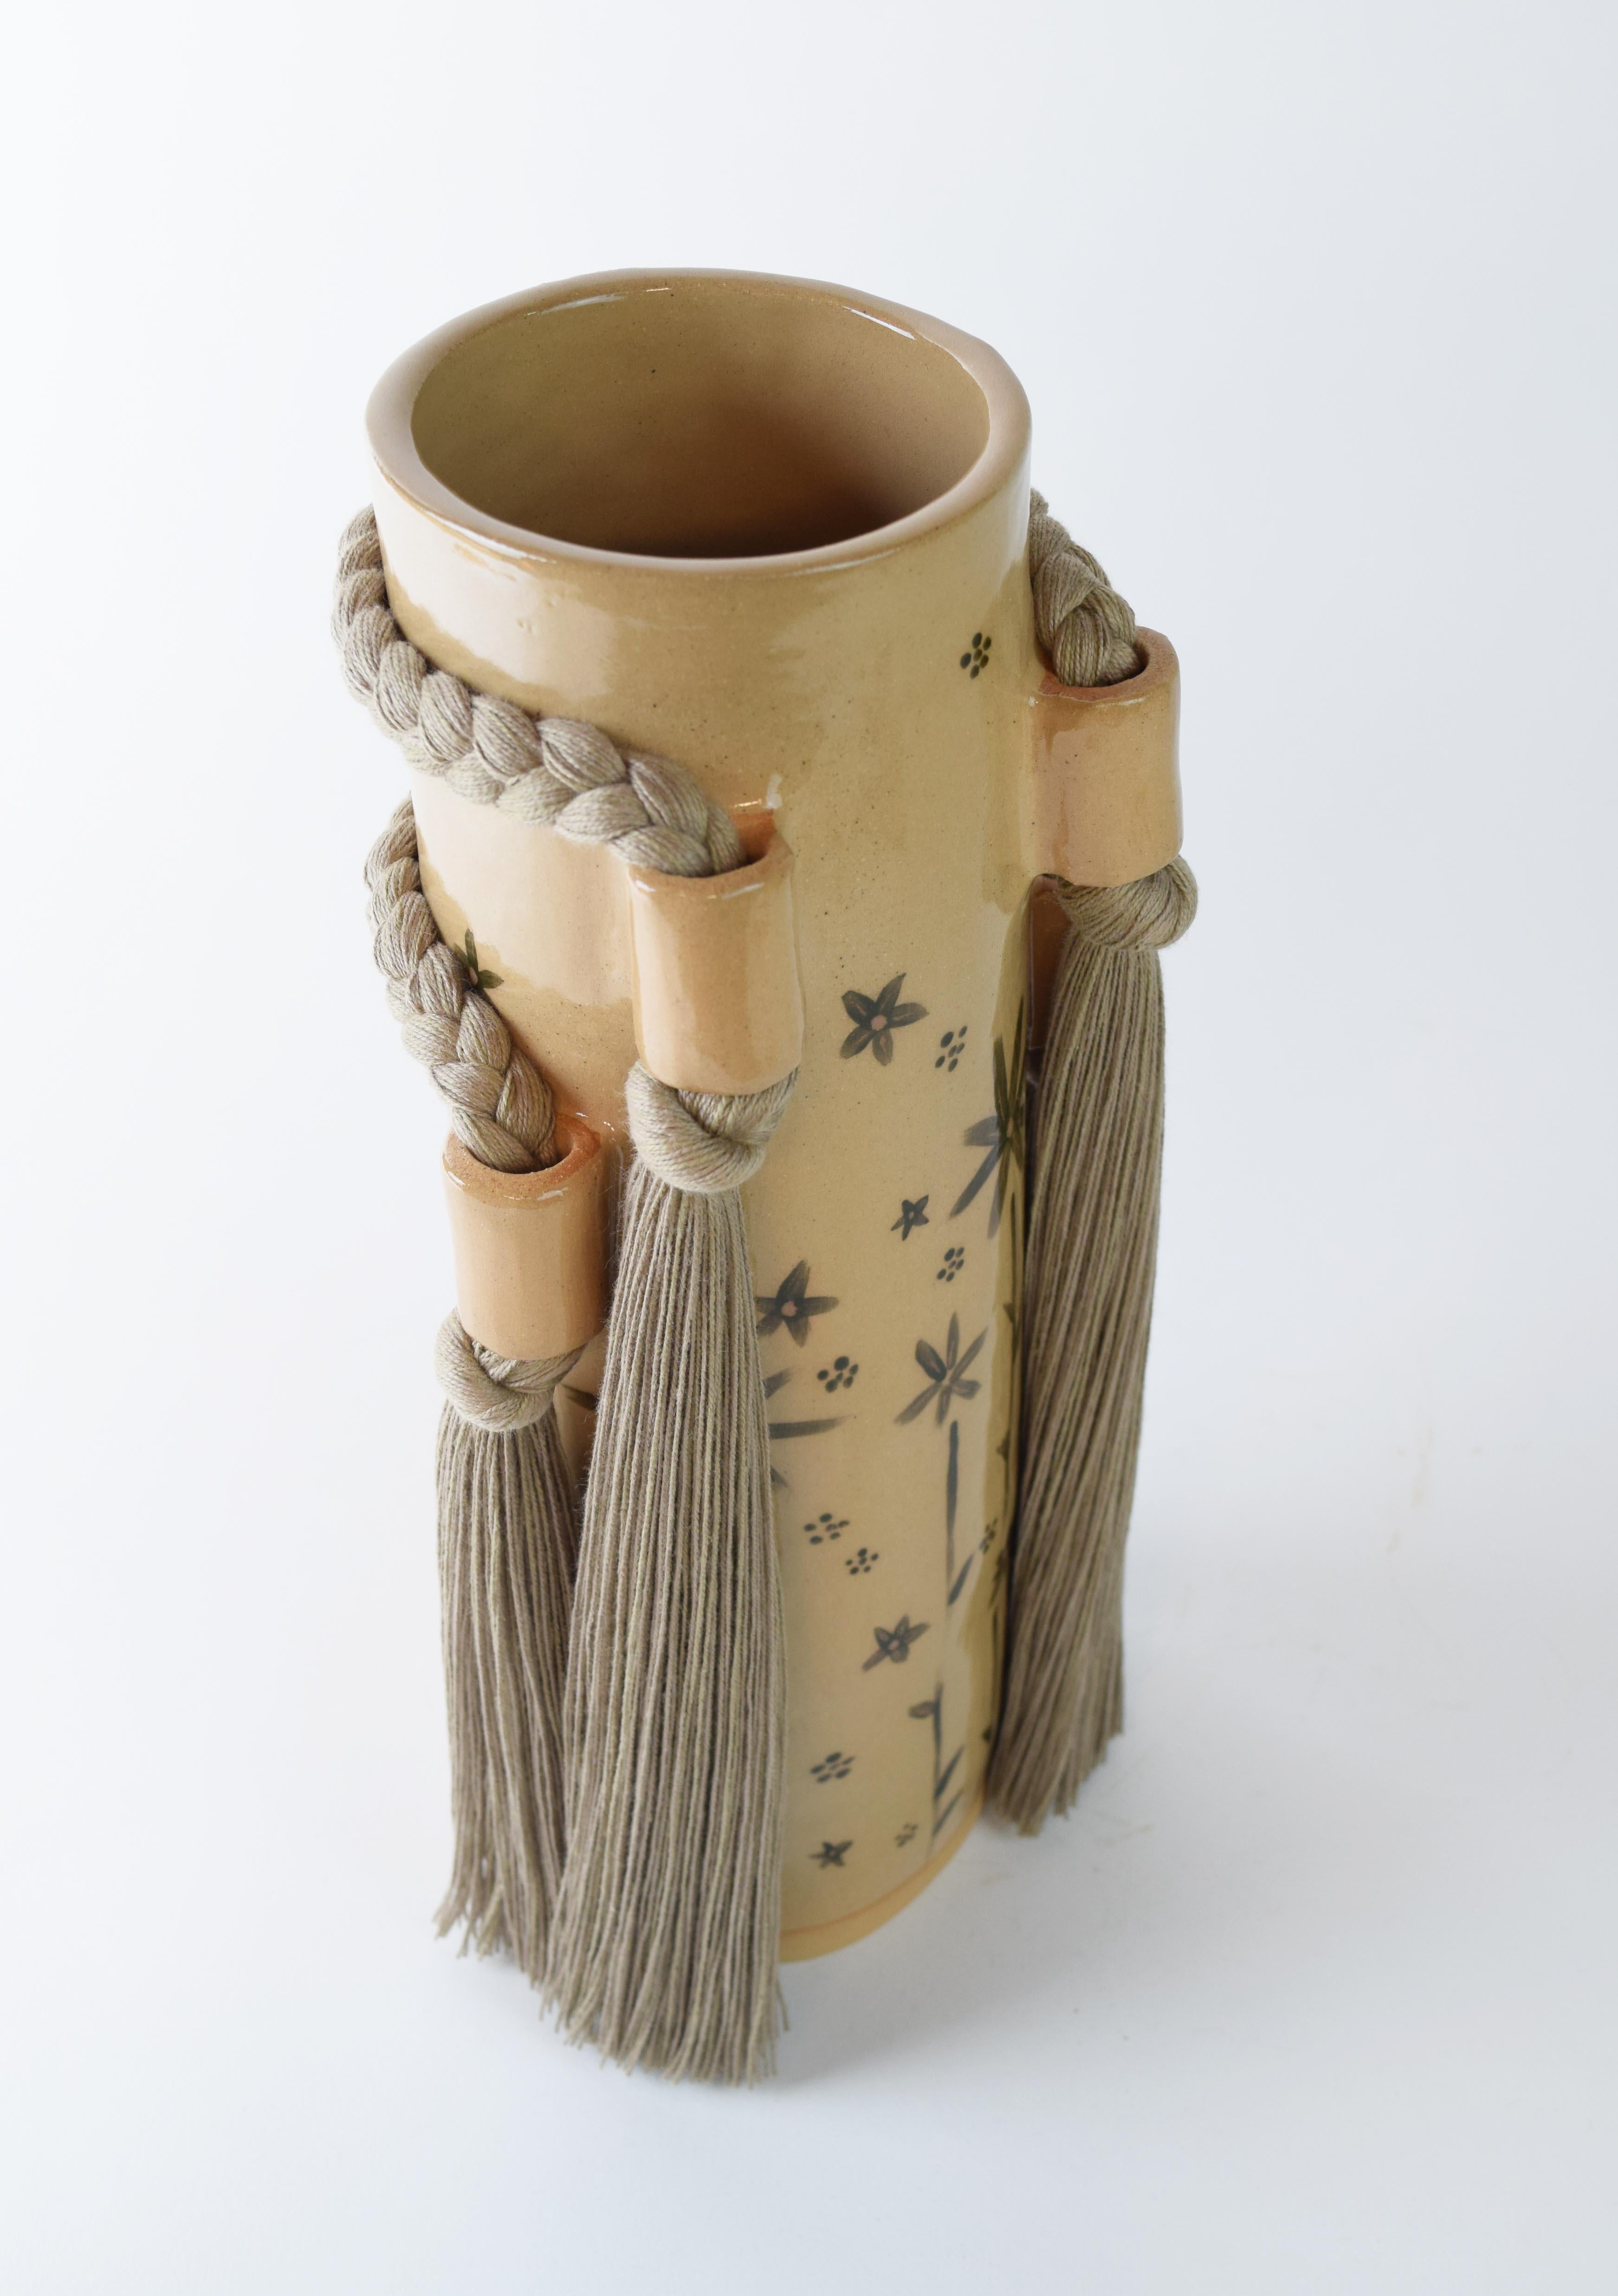 Hand-Knotted OOAK Handmade Ceramic Vase #735 - Olive Green Glazed Floral & Khaki Cotton Braid